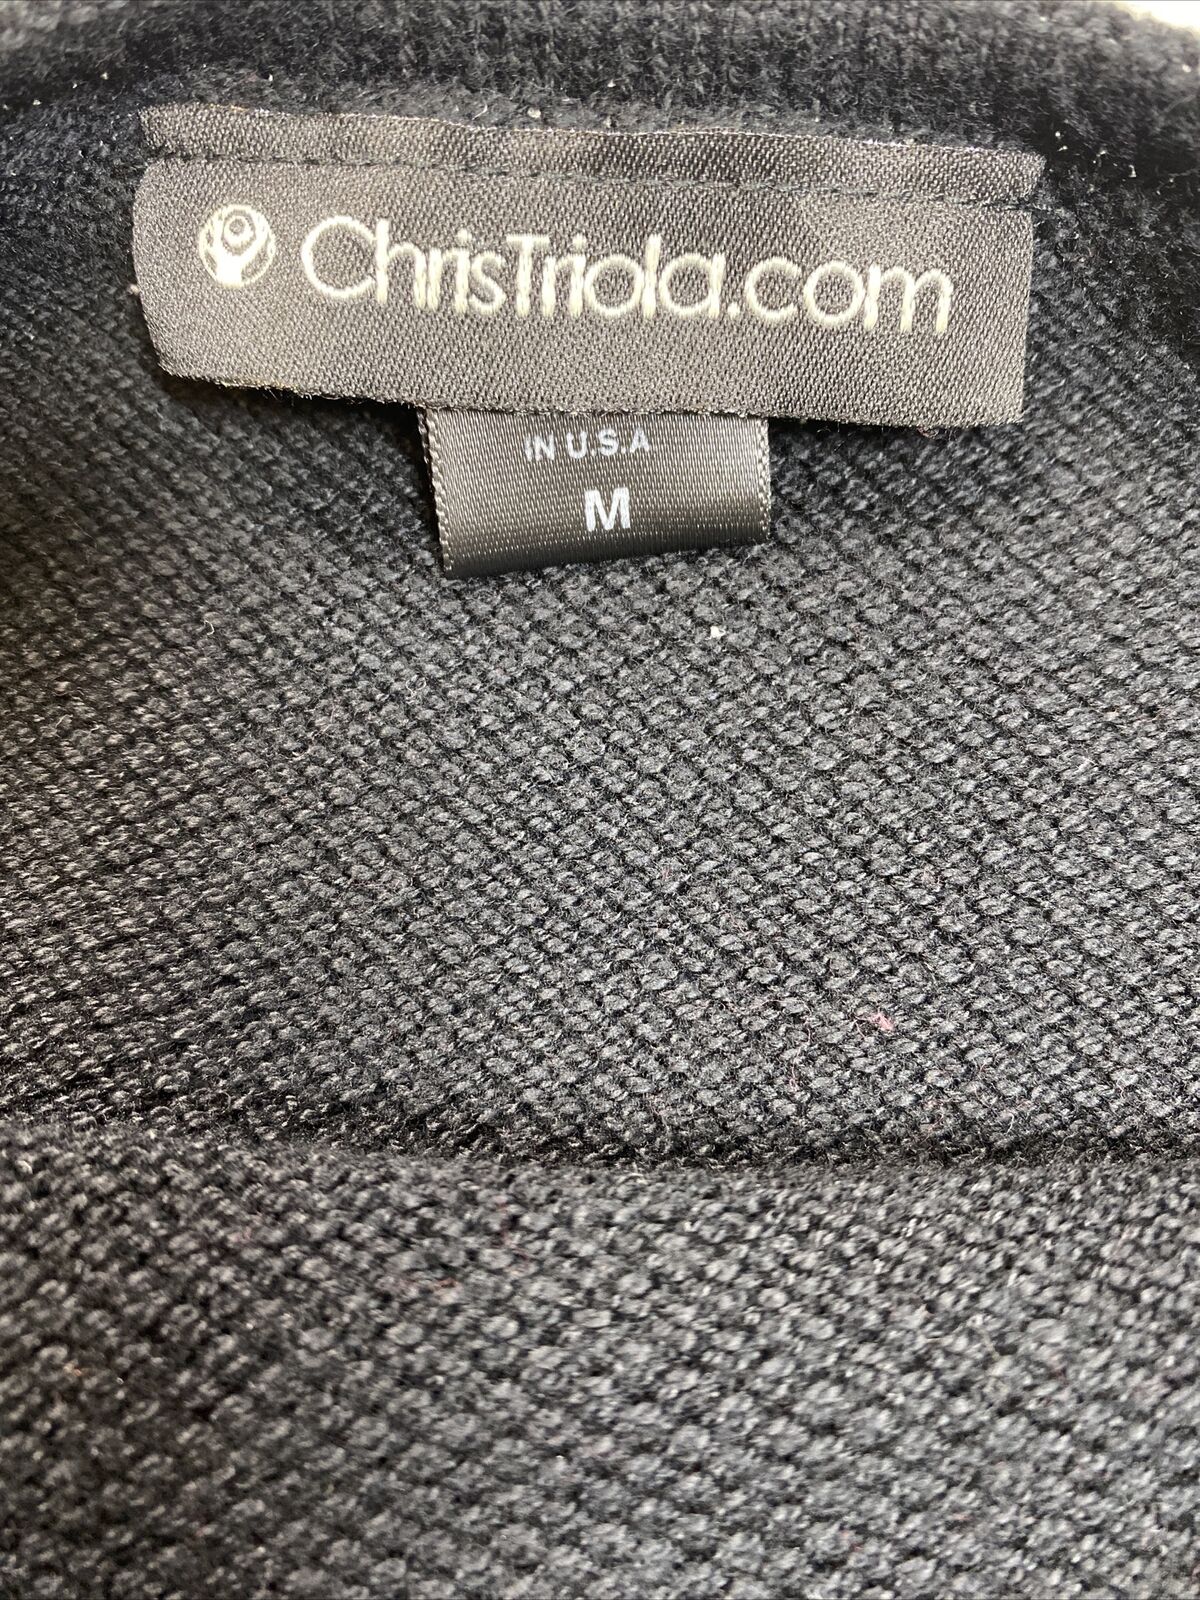 Chris Triola Vestido estilo suéter de algodón de manga larga negro para mujer - M